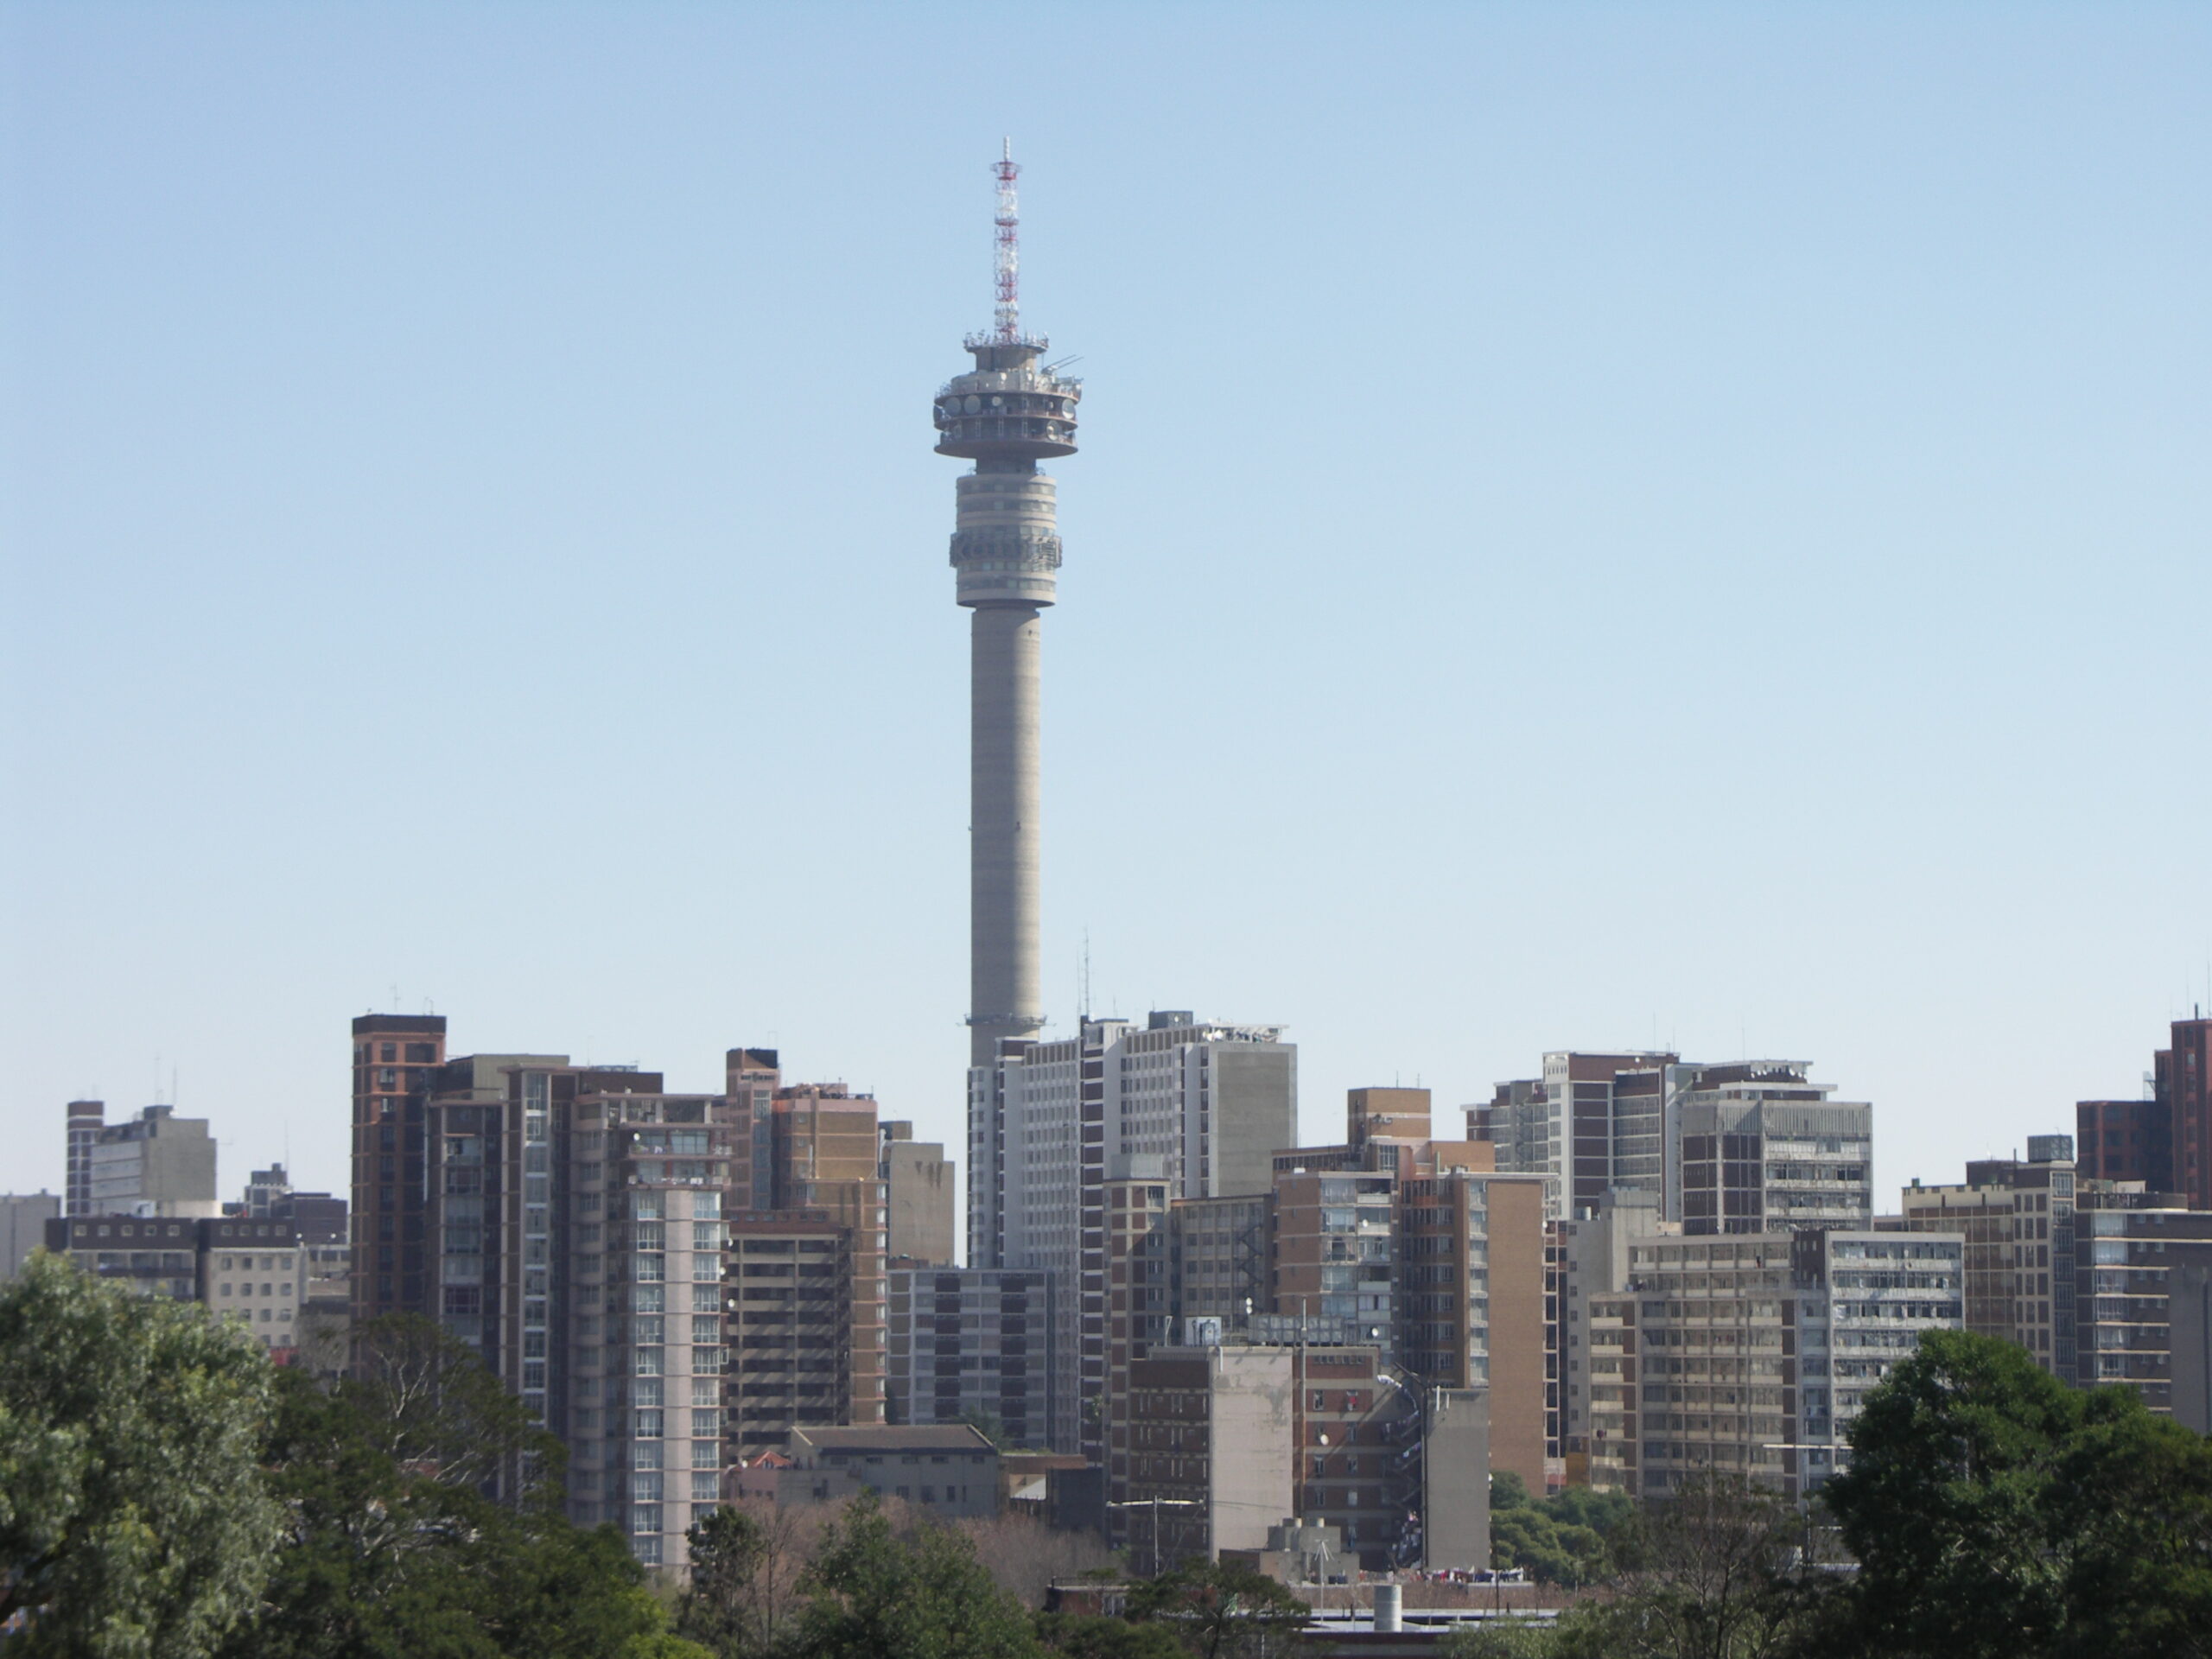 City of Johannesburg, South Africa